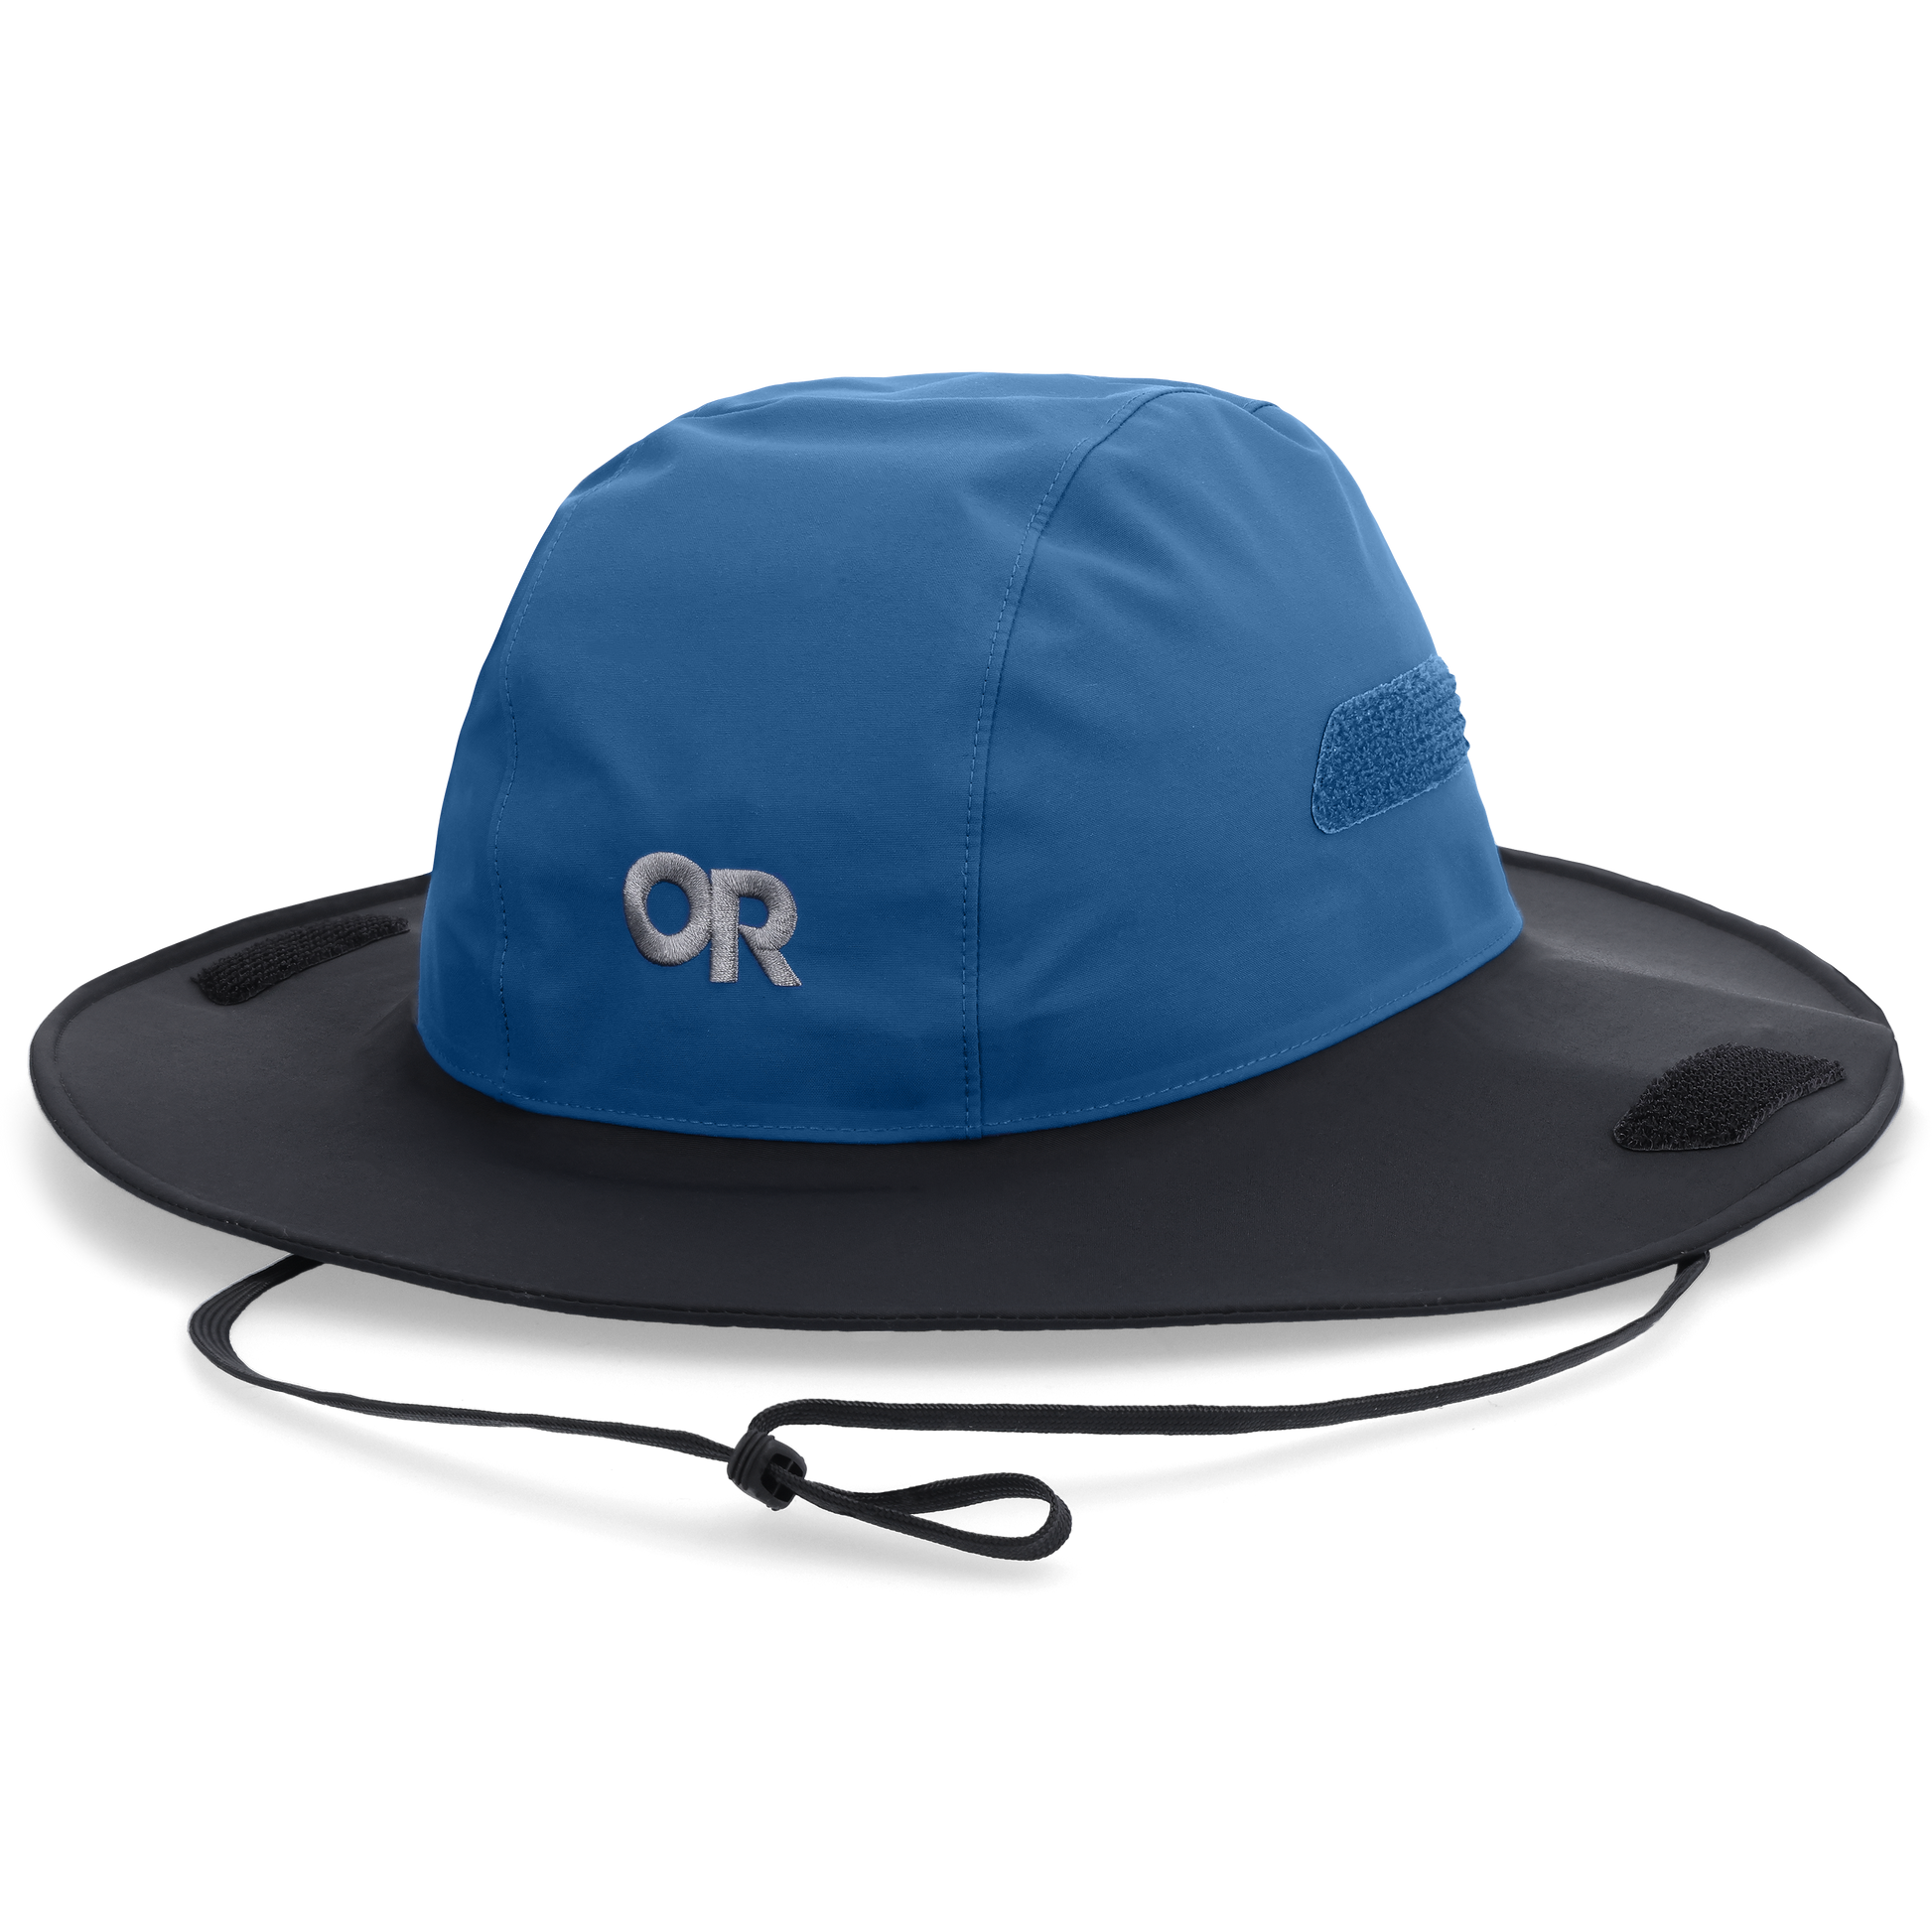 Outdoor Research Seattle Sombrero Rain Hat - Fatigue/Black